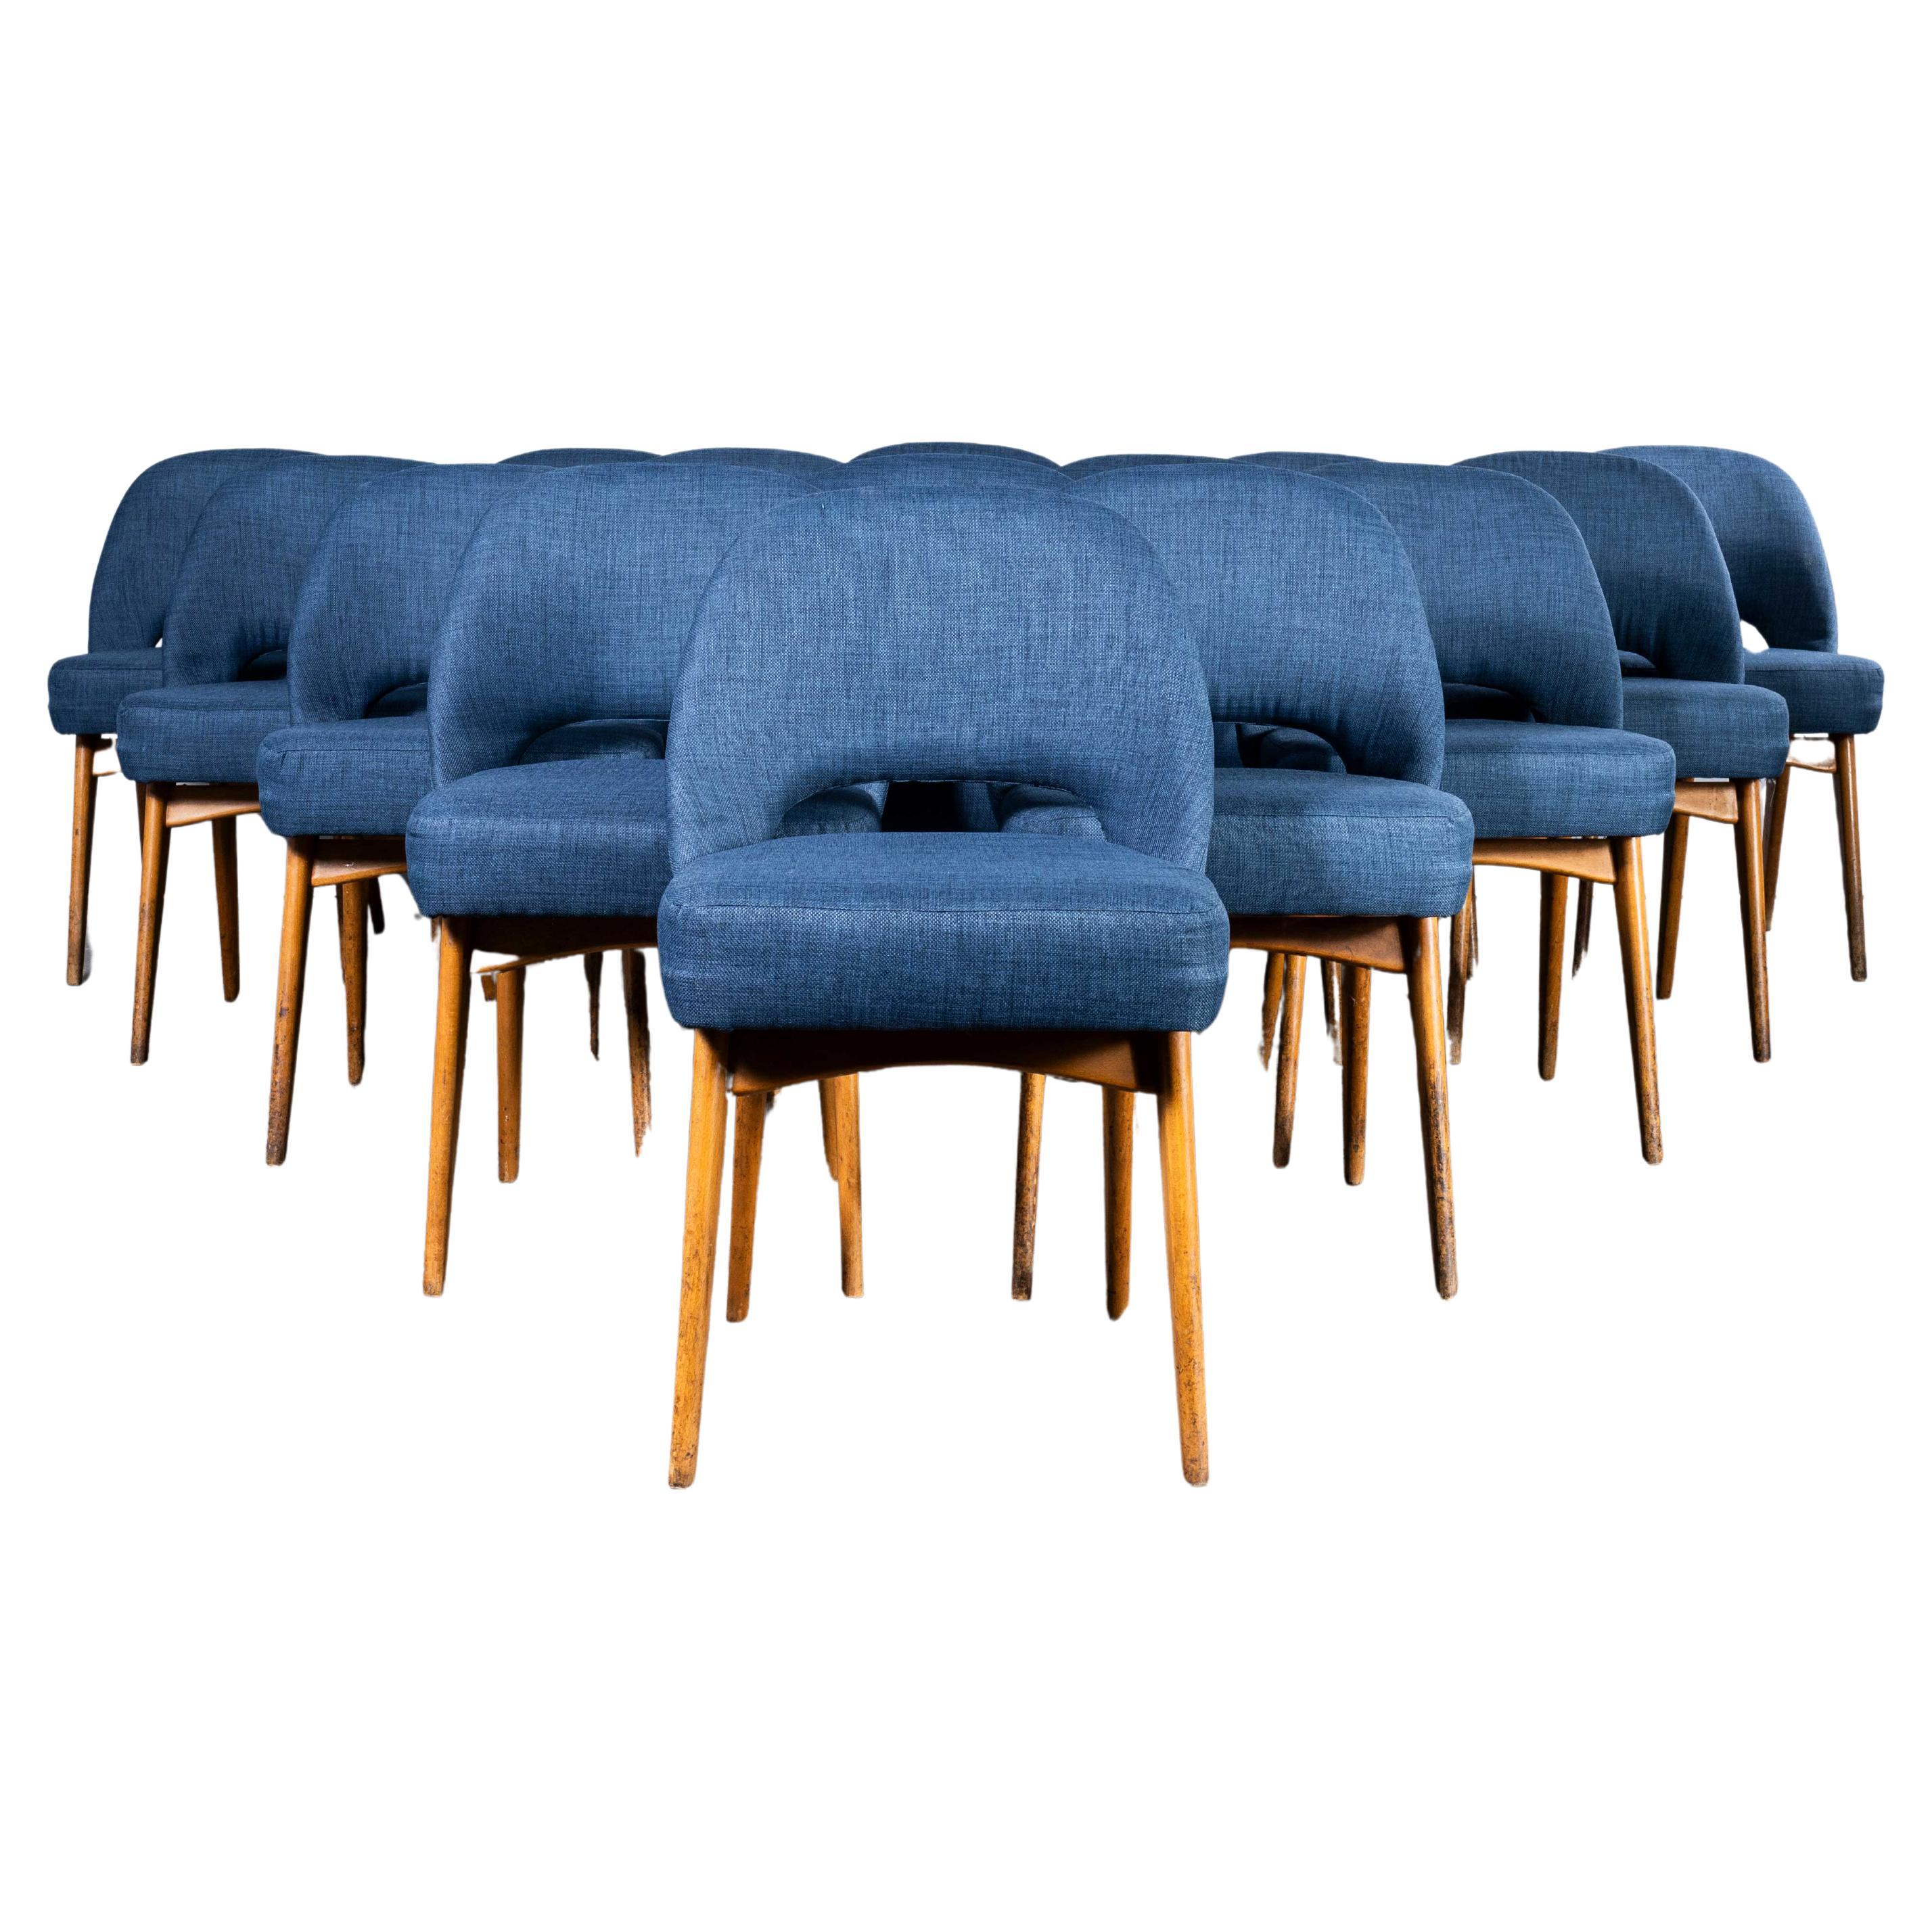 1960's Original gepolsterte Ben Chairs - Gute Menge verfügbar